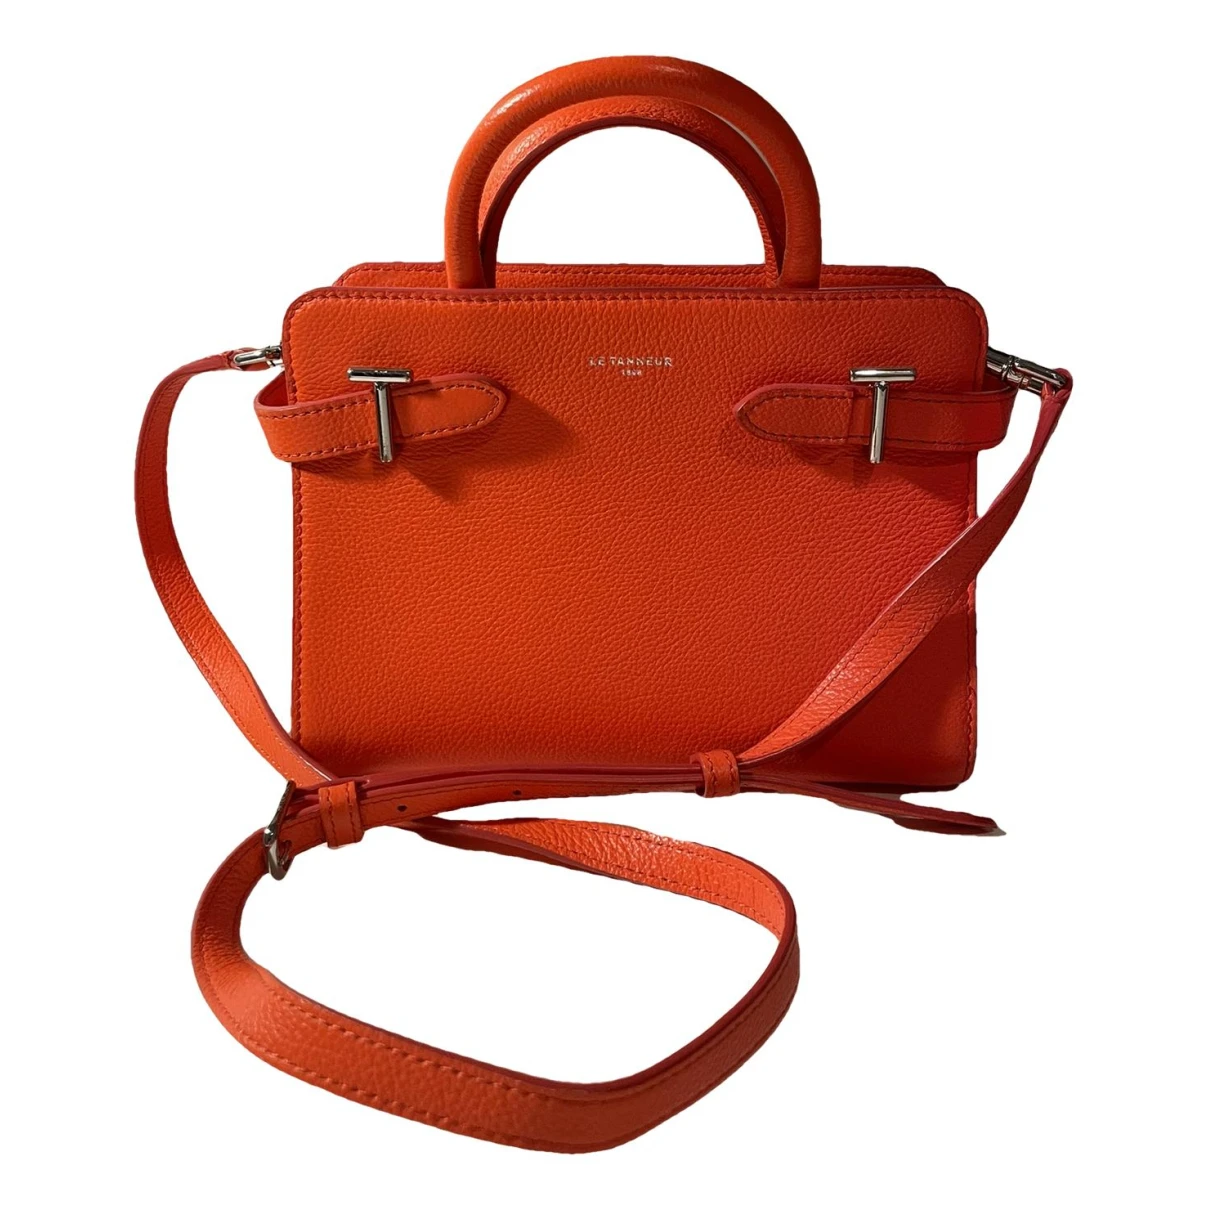 Pre-owned Le Tanneur Leather Handbag In Orange